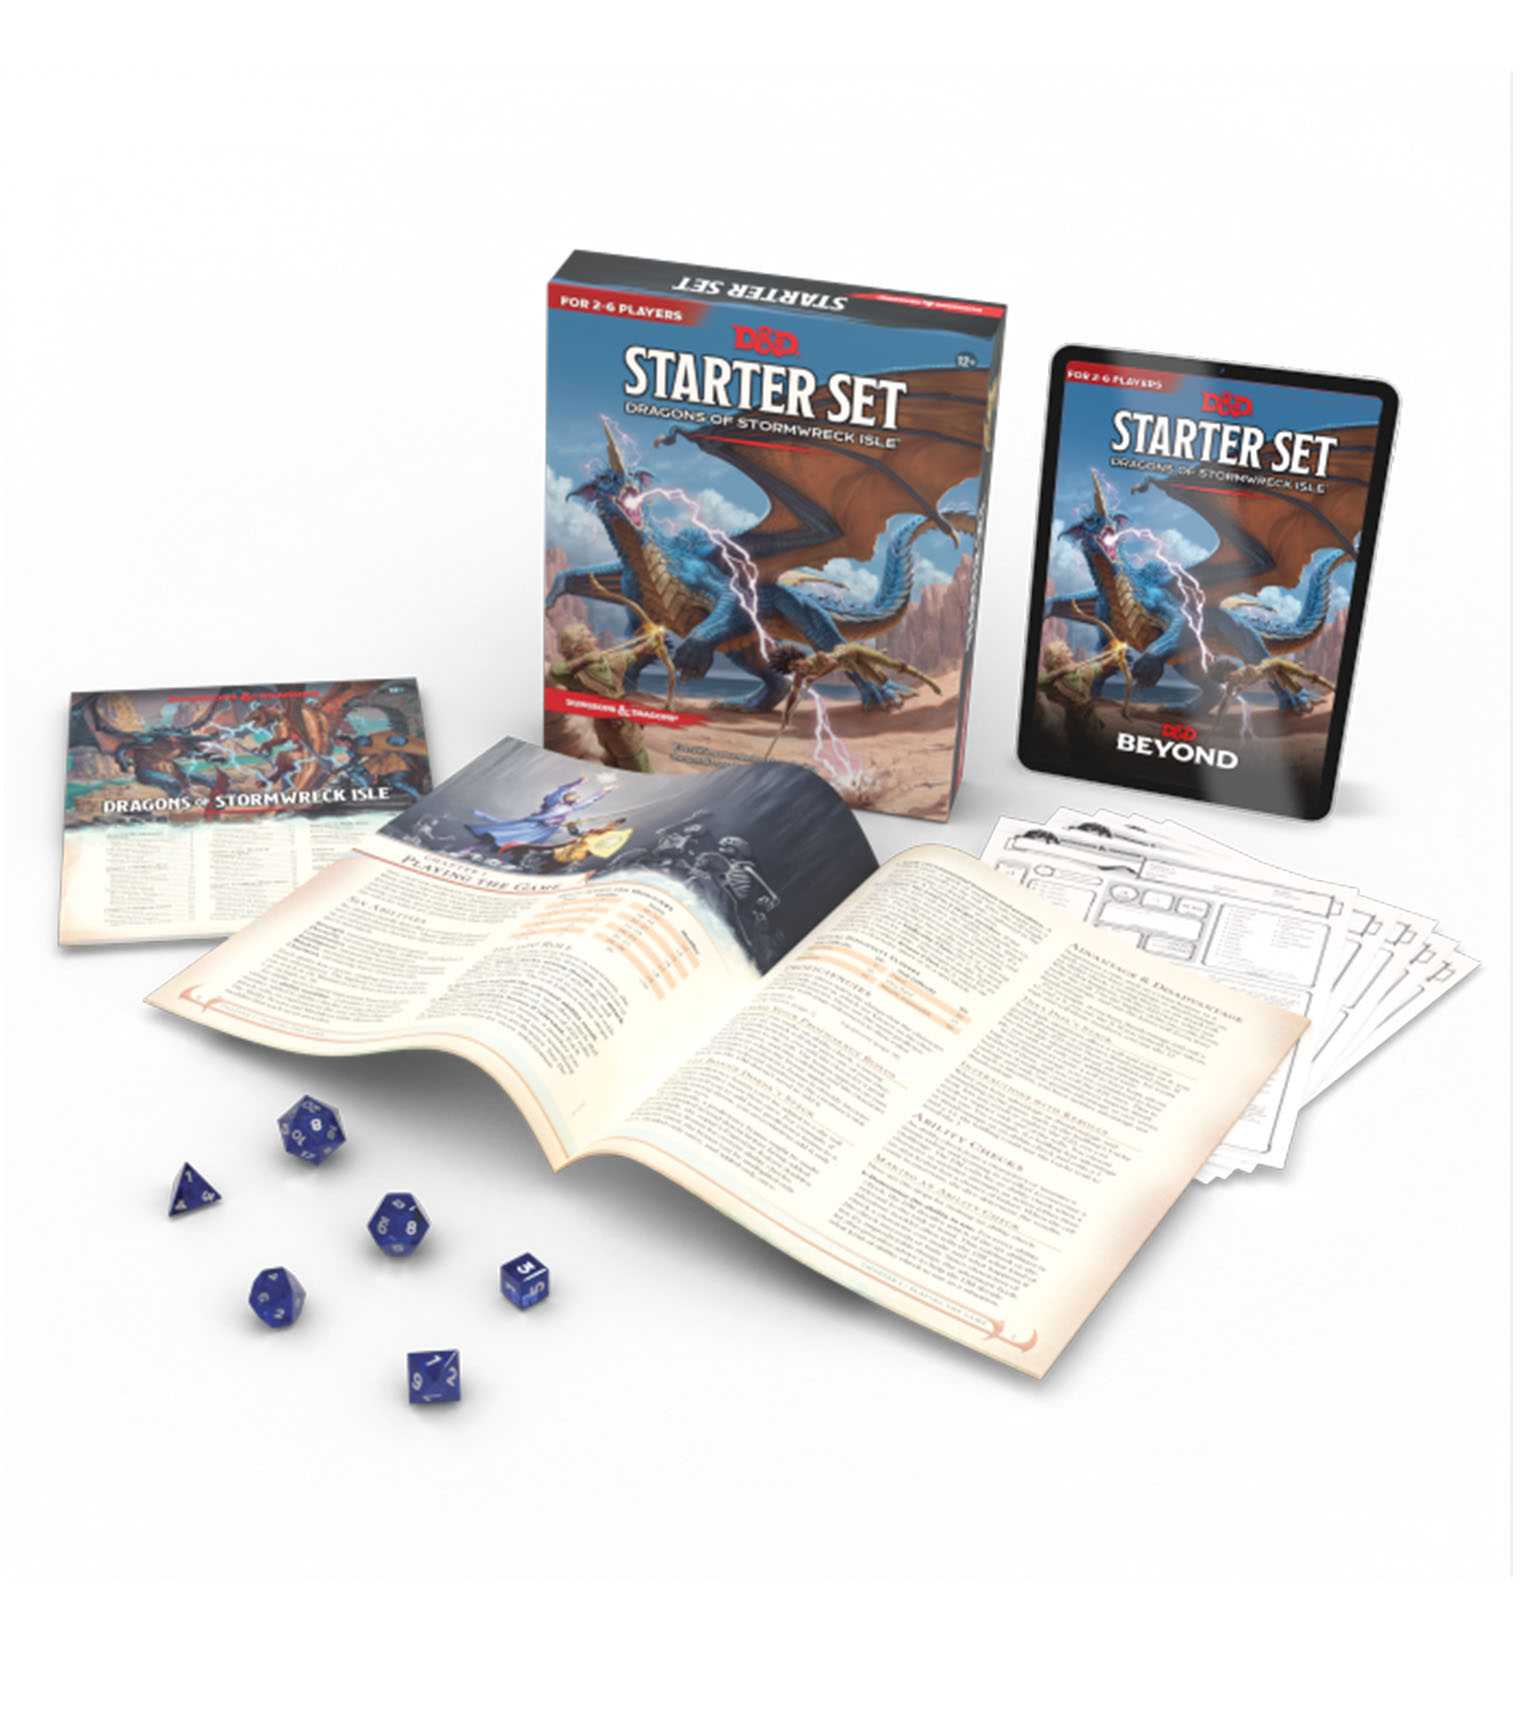 Essential Dungeons & Dragons Starter Set (Limited Red Box) (Livre